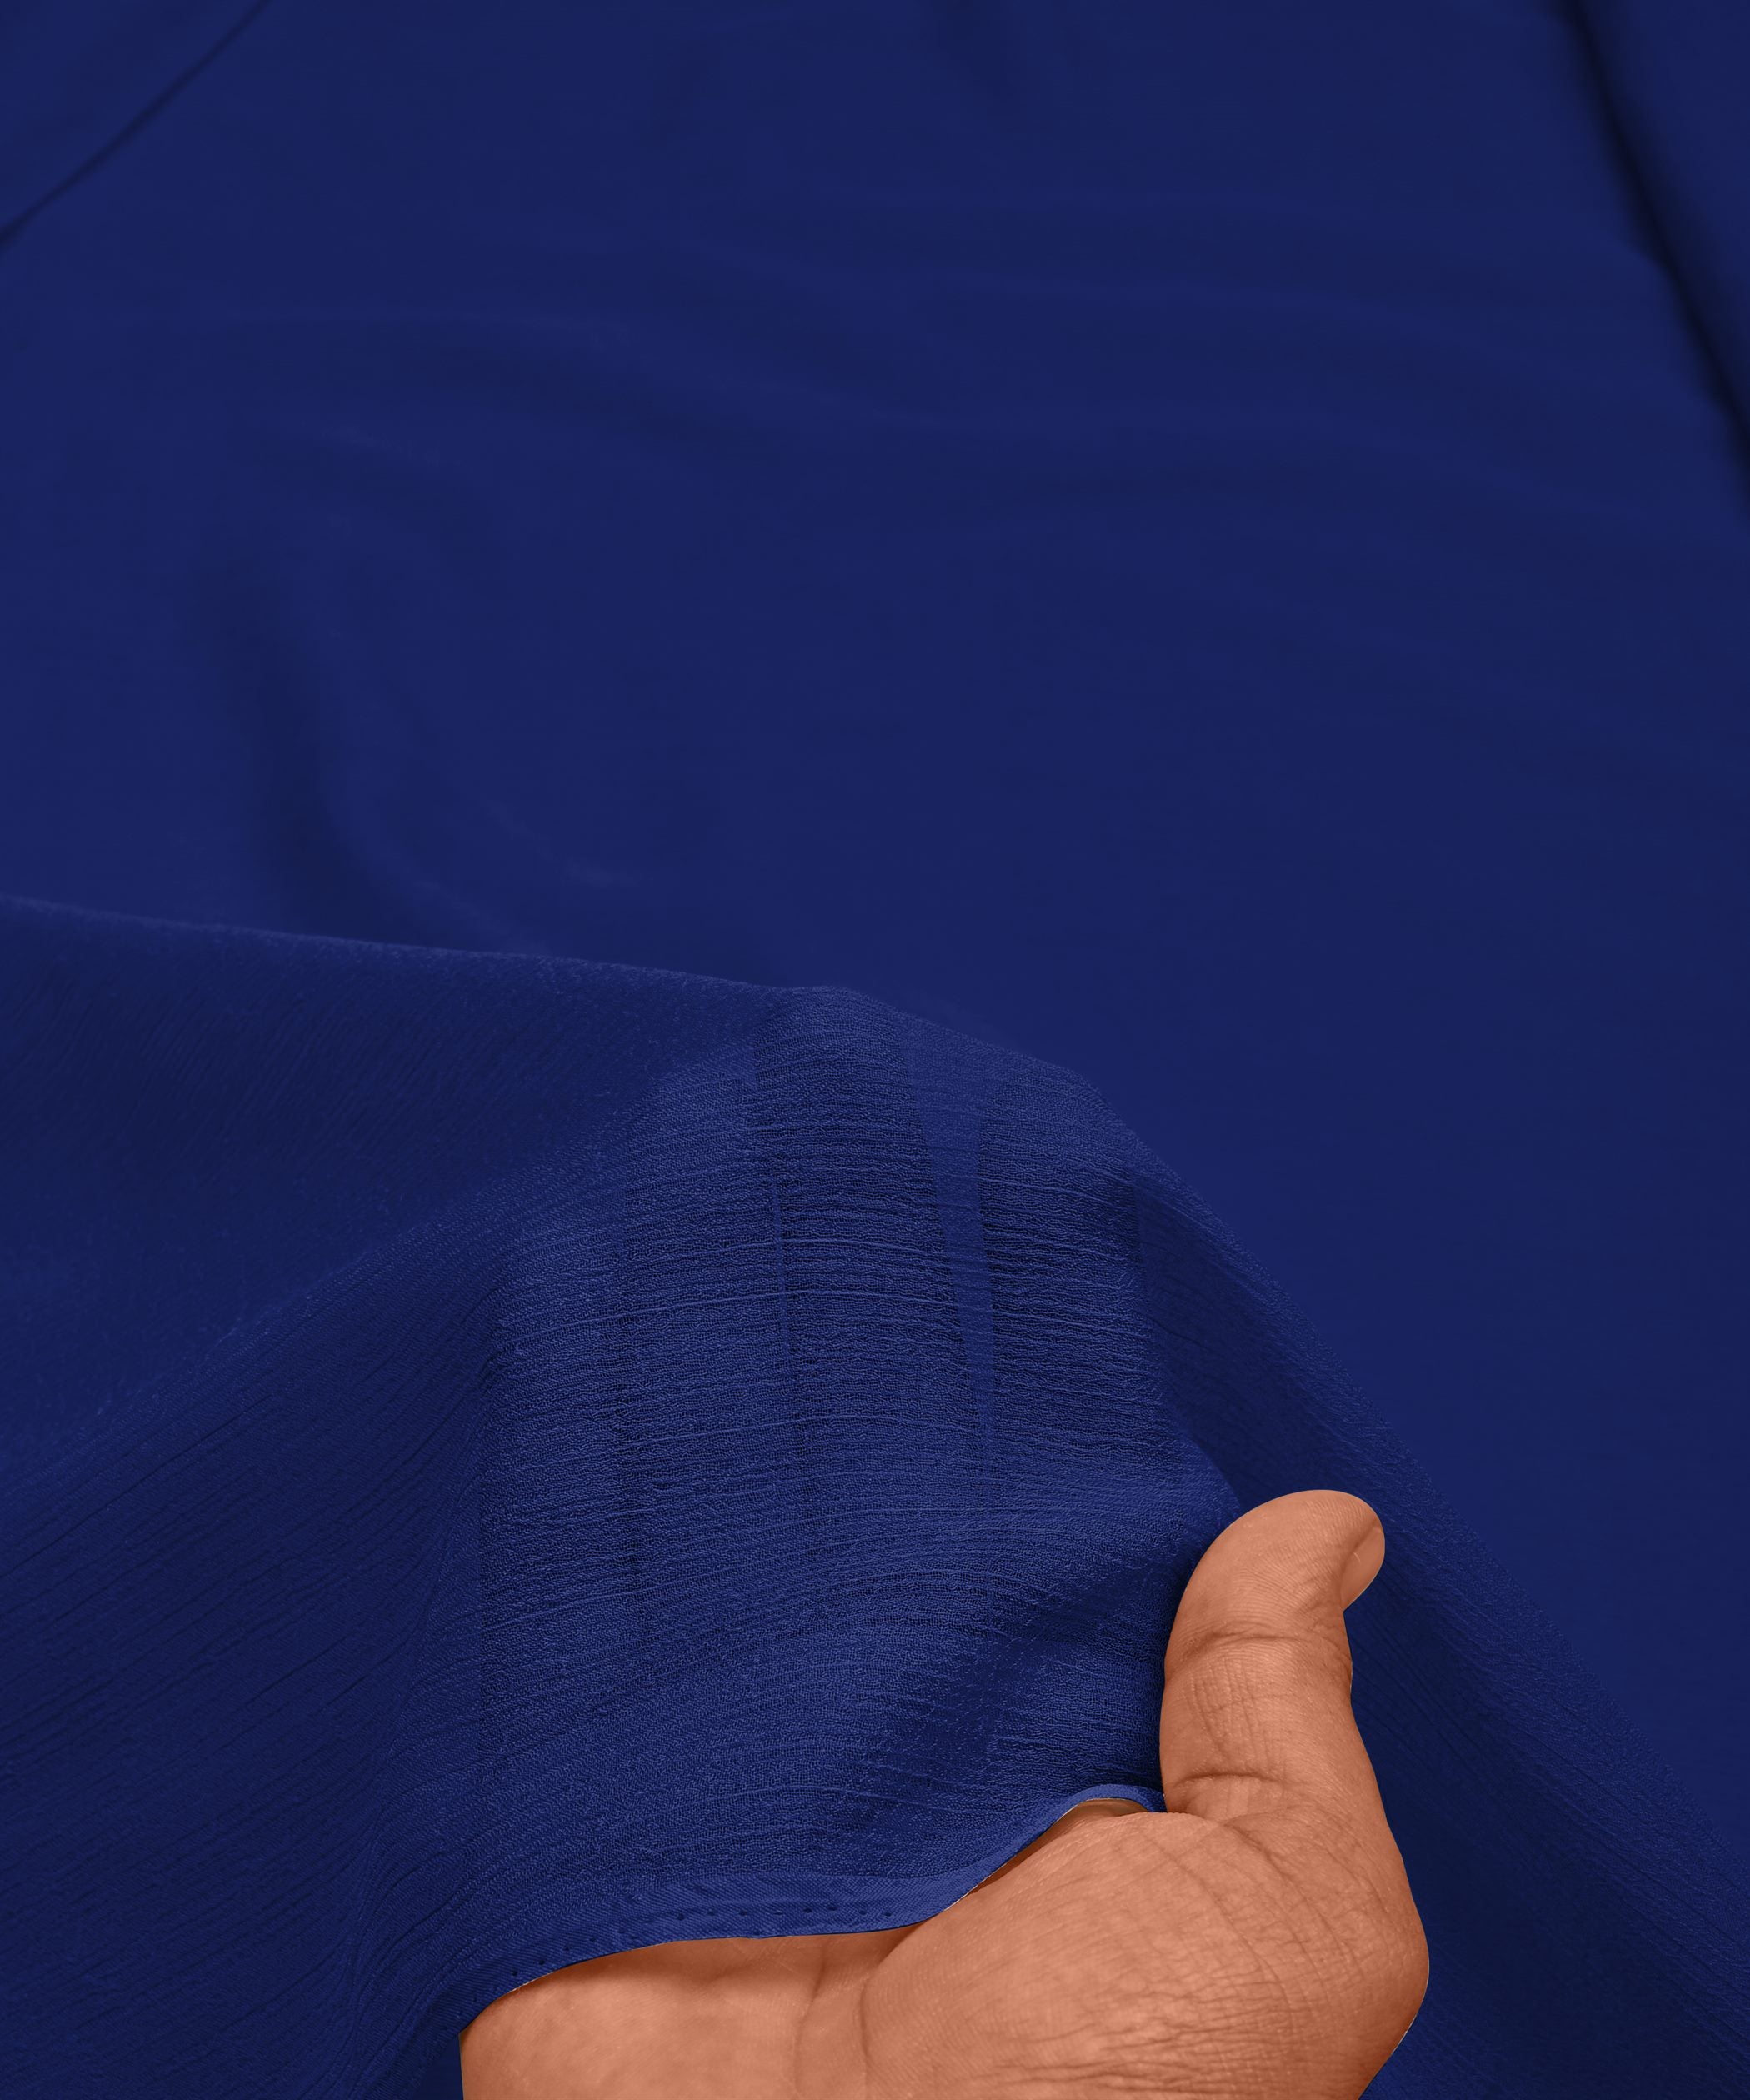 Navy Blue Plain Dyed Bemberg Chiffon Fabric